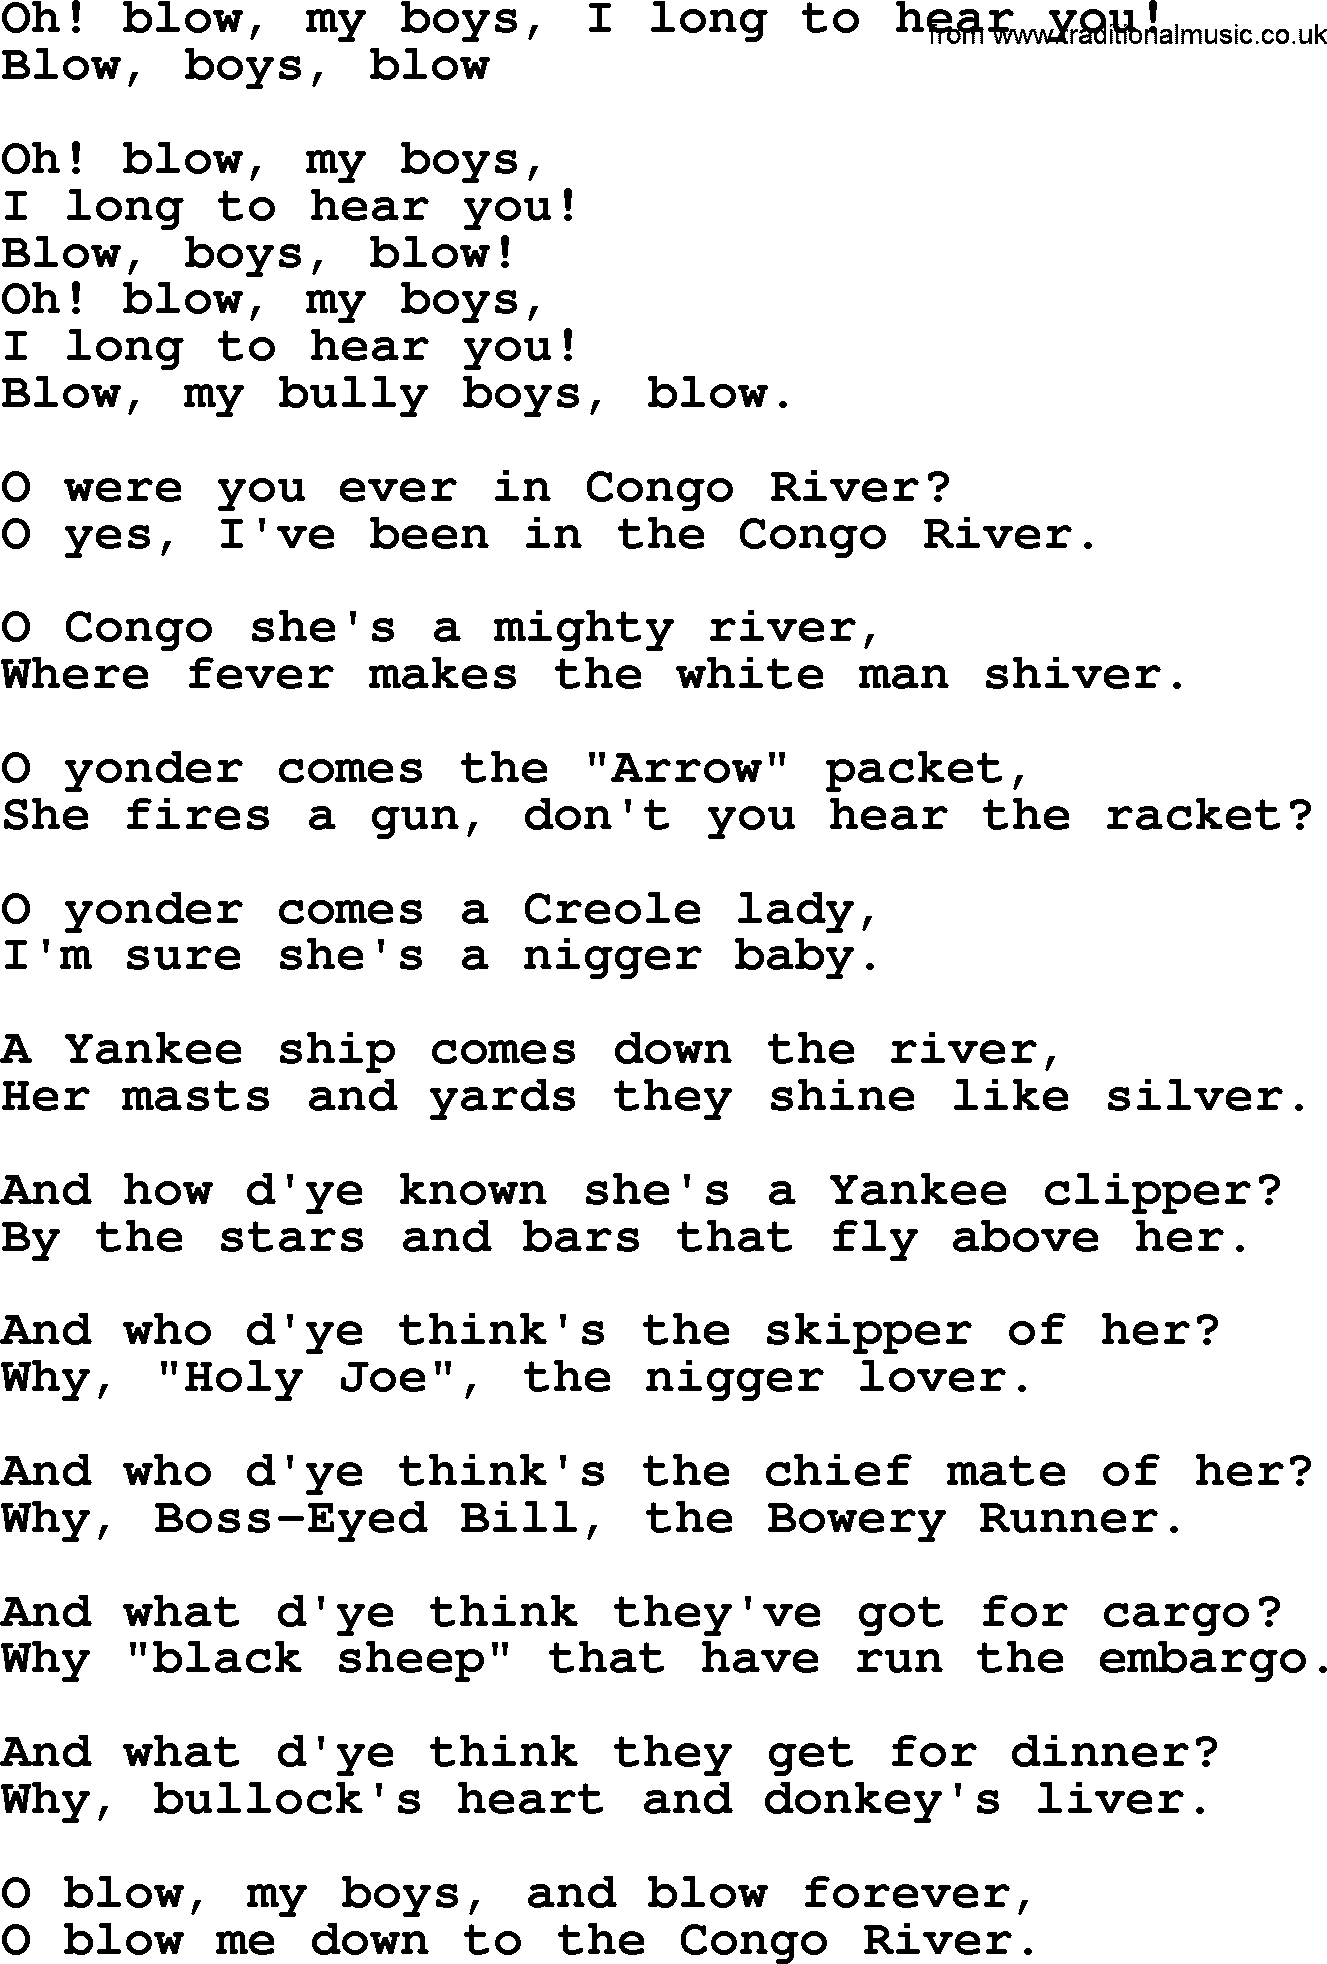 Sea Song or Shantie: Oh Blow My Boys I Long To Hear You, lyrics